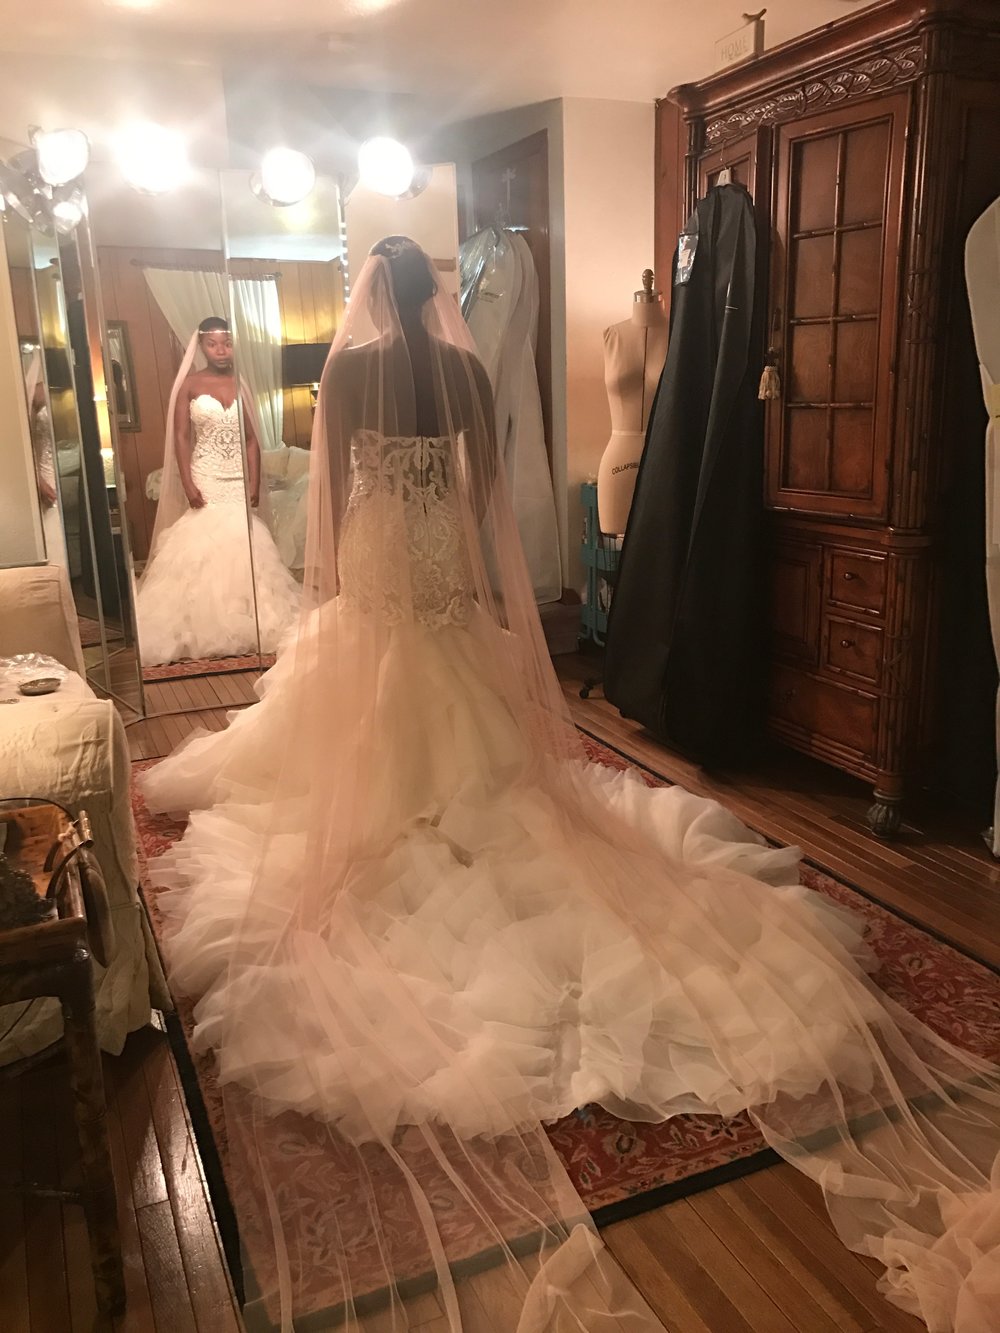 Black Destination Bride - BlackDesti Wedding Journal - Bridefriends Podcast -10 - dress fitting1 - 2 veils.JPG